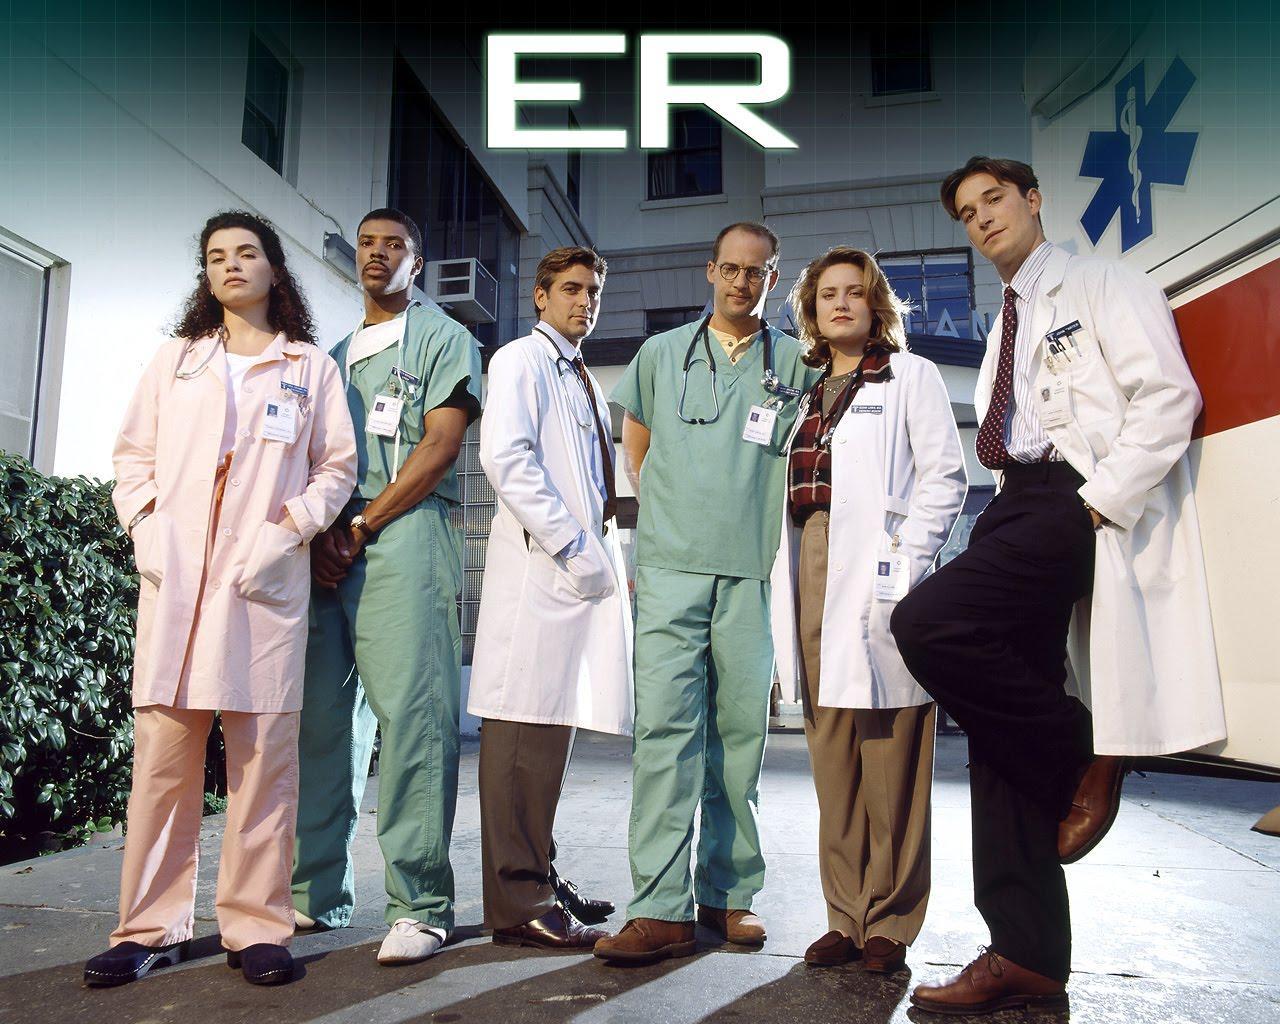 ER (TV Series) - Wallpapers